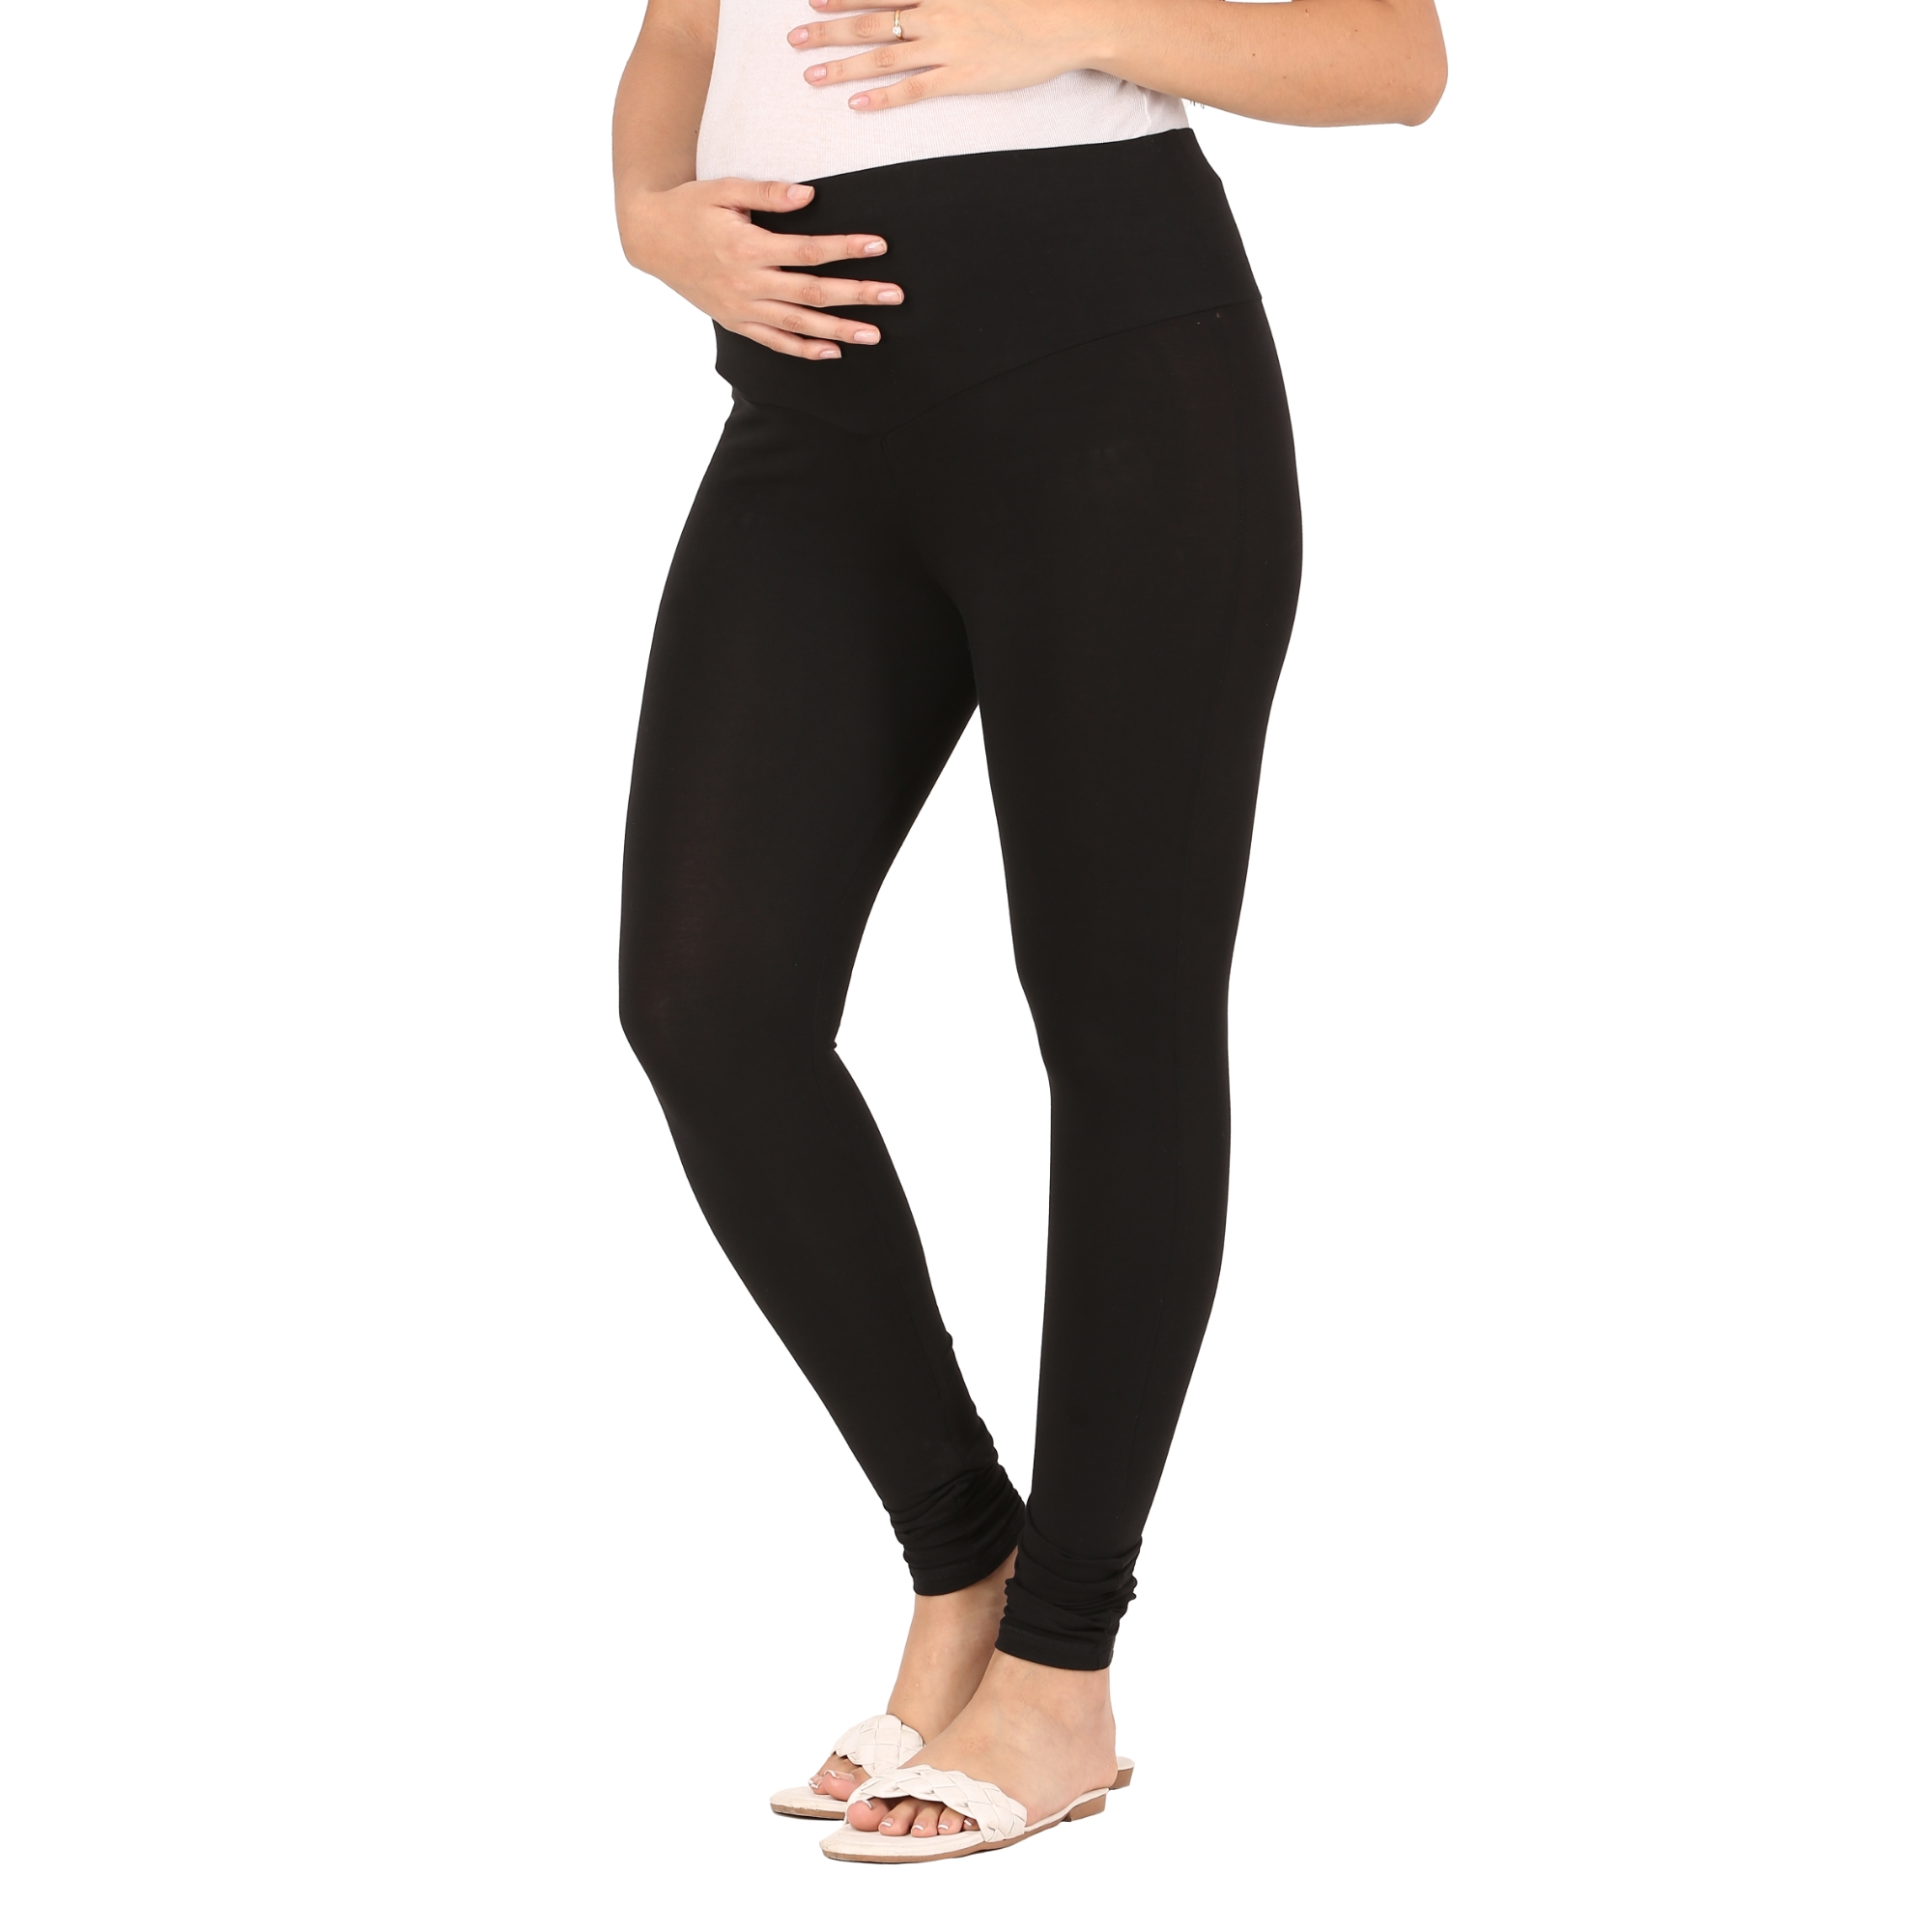 Stretchable Pregnancy & Post Delivery Leggings - Black (M)